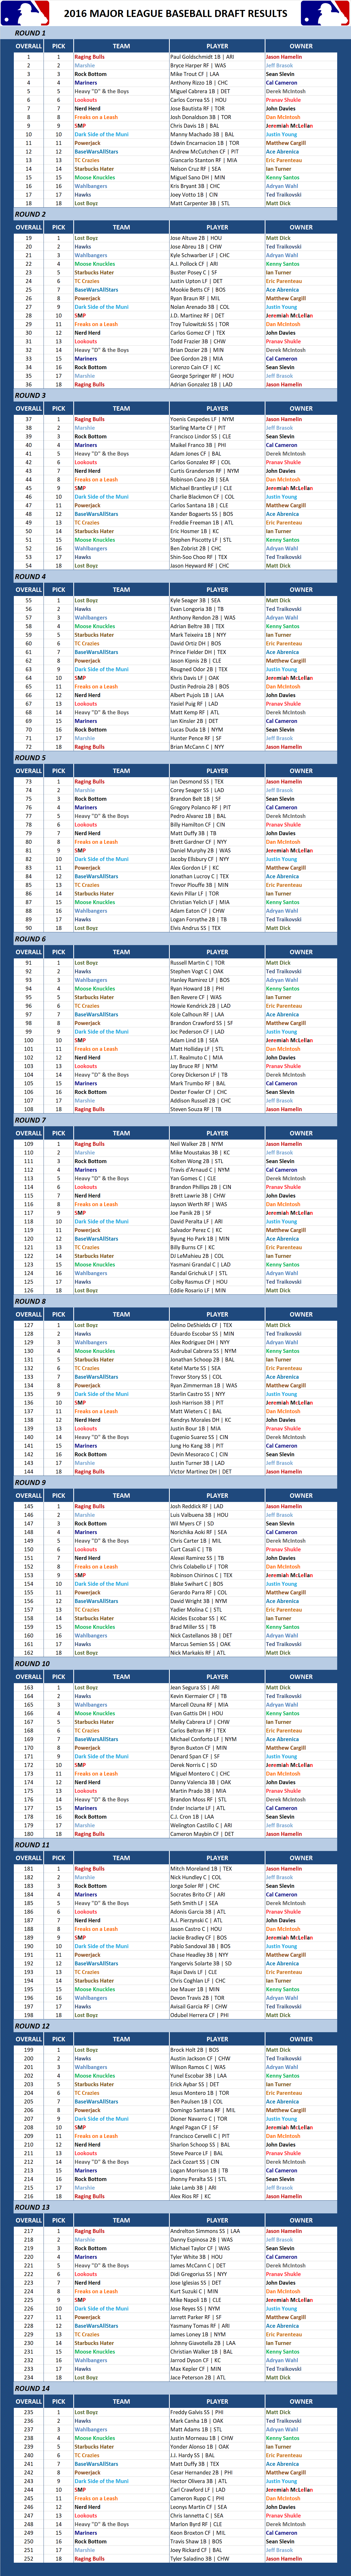 2016 Major league Baseball Draft Results